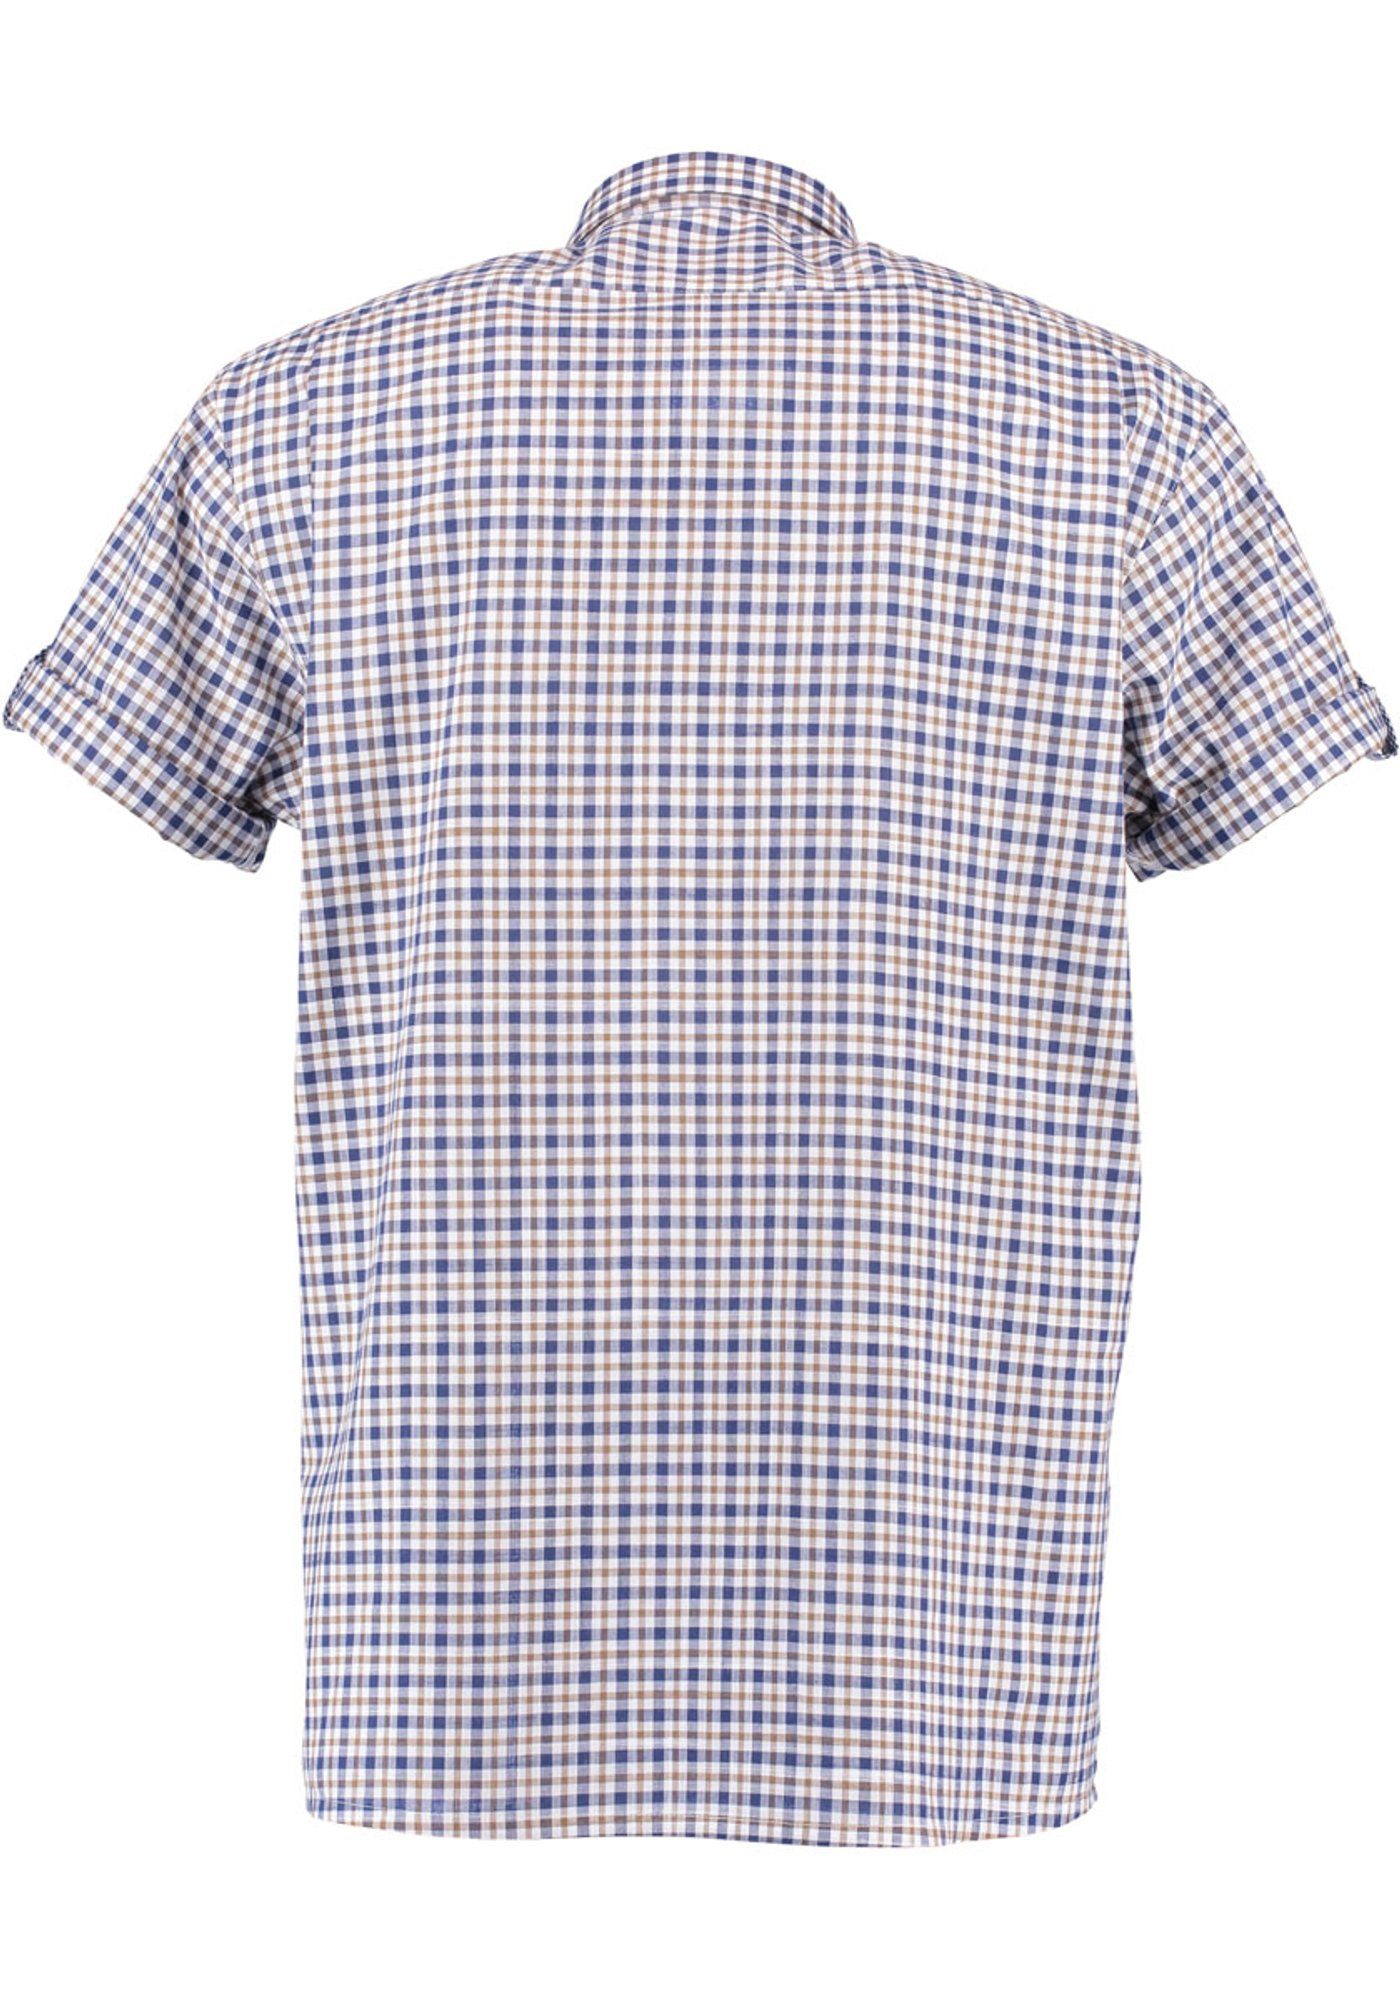 OS-Trachten Kurzarmhemd mit Ivuve Liegekragen, mit Knopf Trachtenhemd 2 dunkelbraun Paspelstaschen